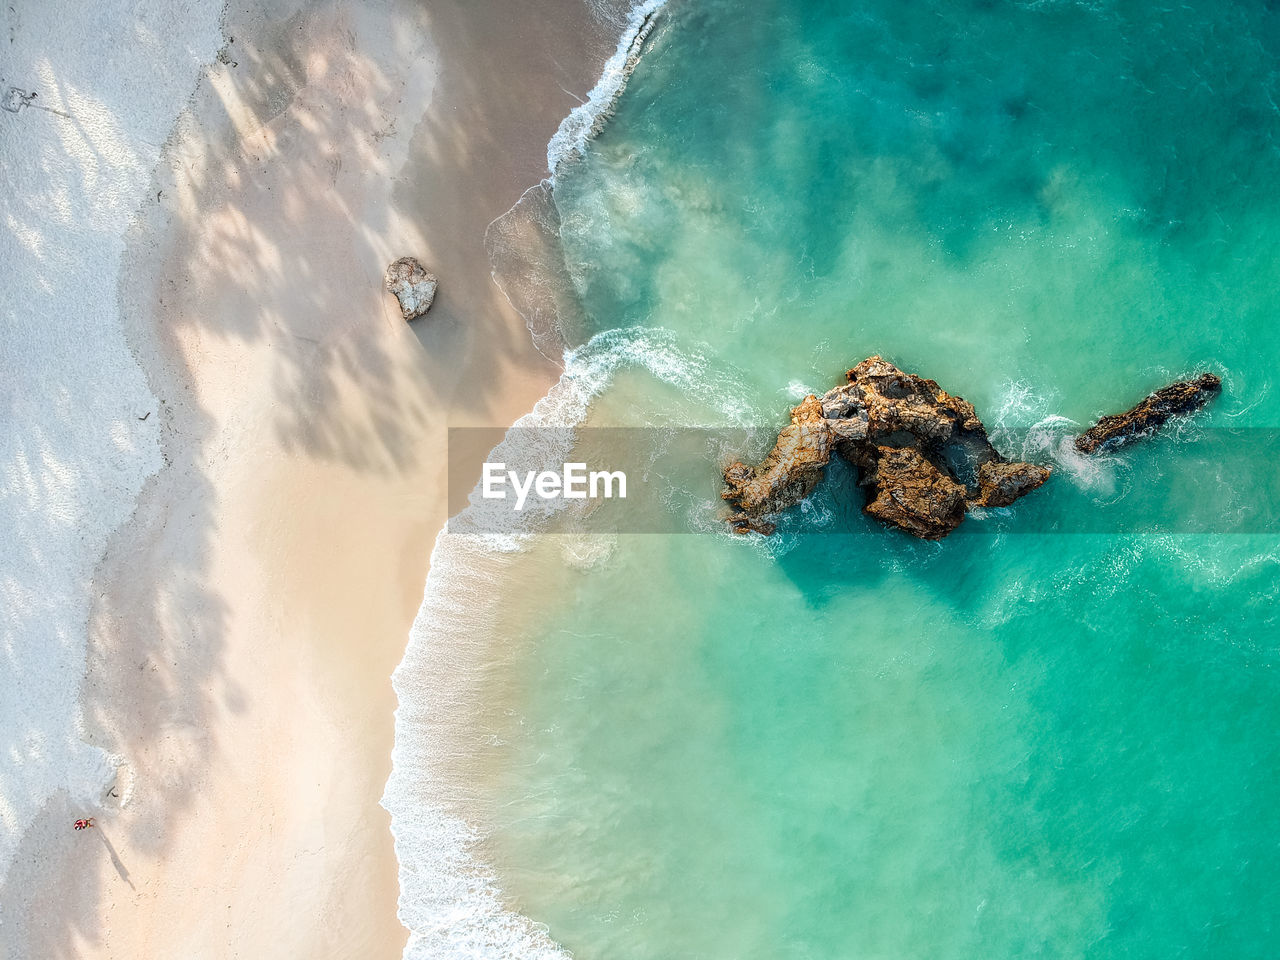 Drone view of a rock in the water at otama beach near matarangi, coromandel peninsula in new zealand